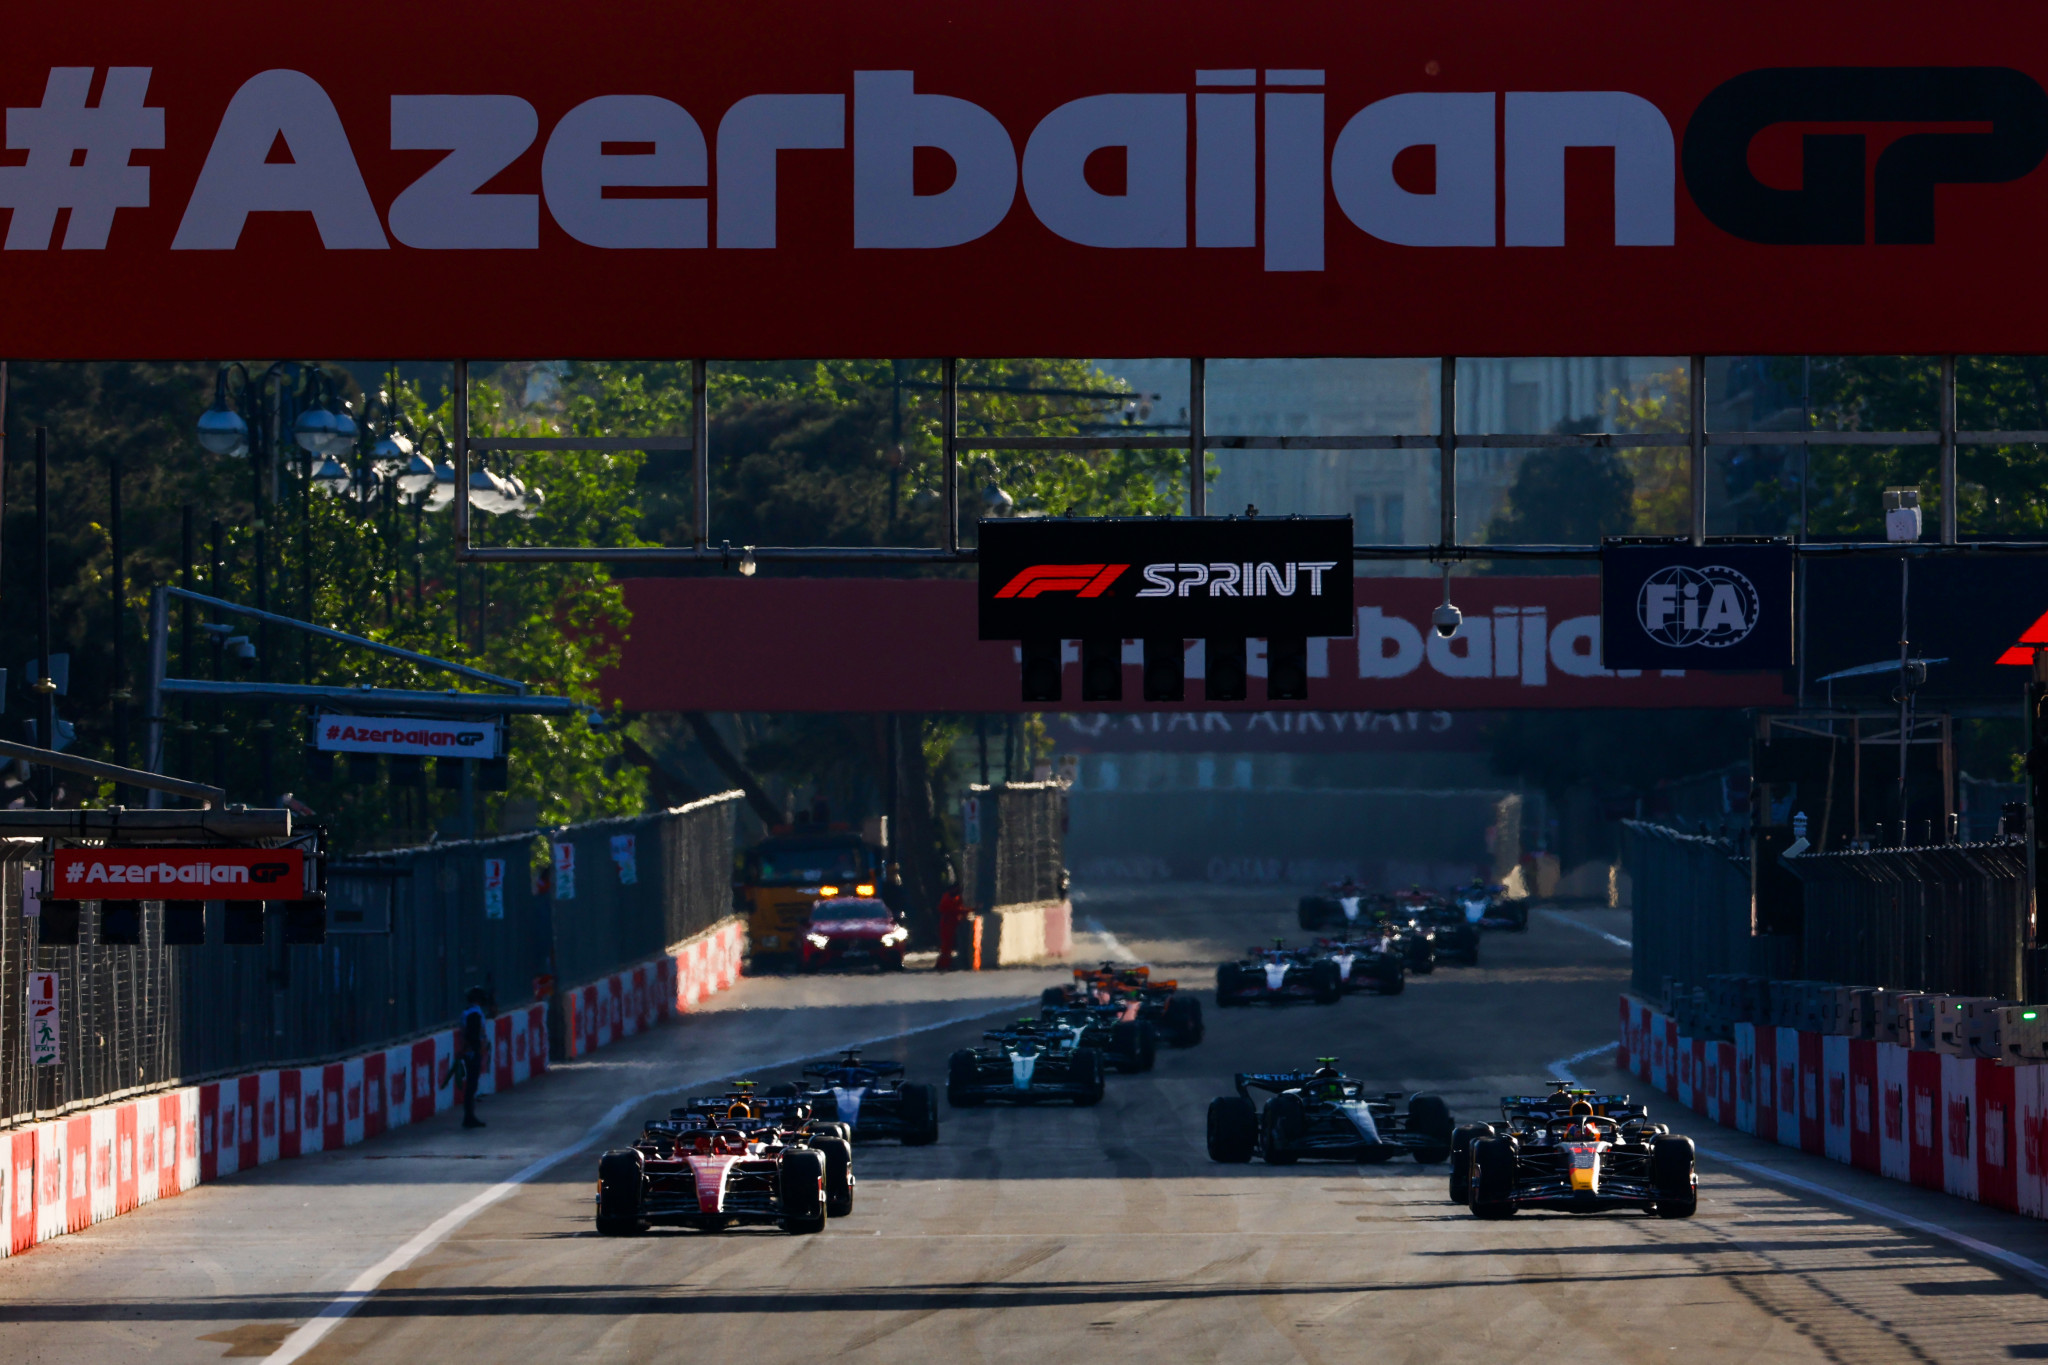 Azerbaijan Grand Prix: Sprint shootout and sprint race